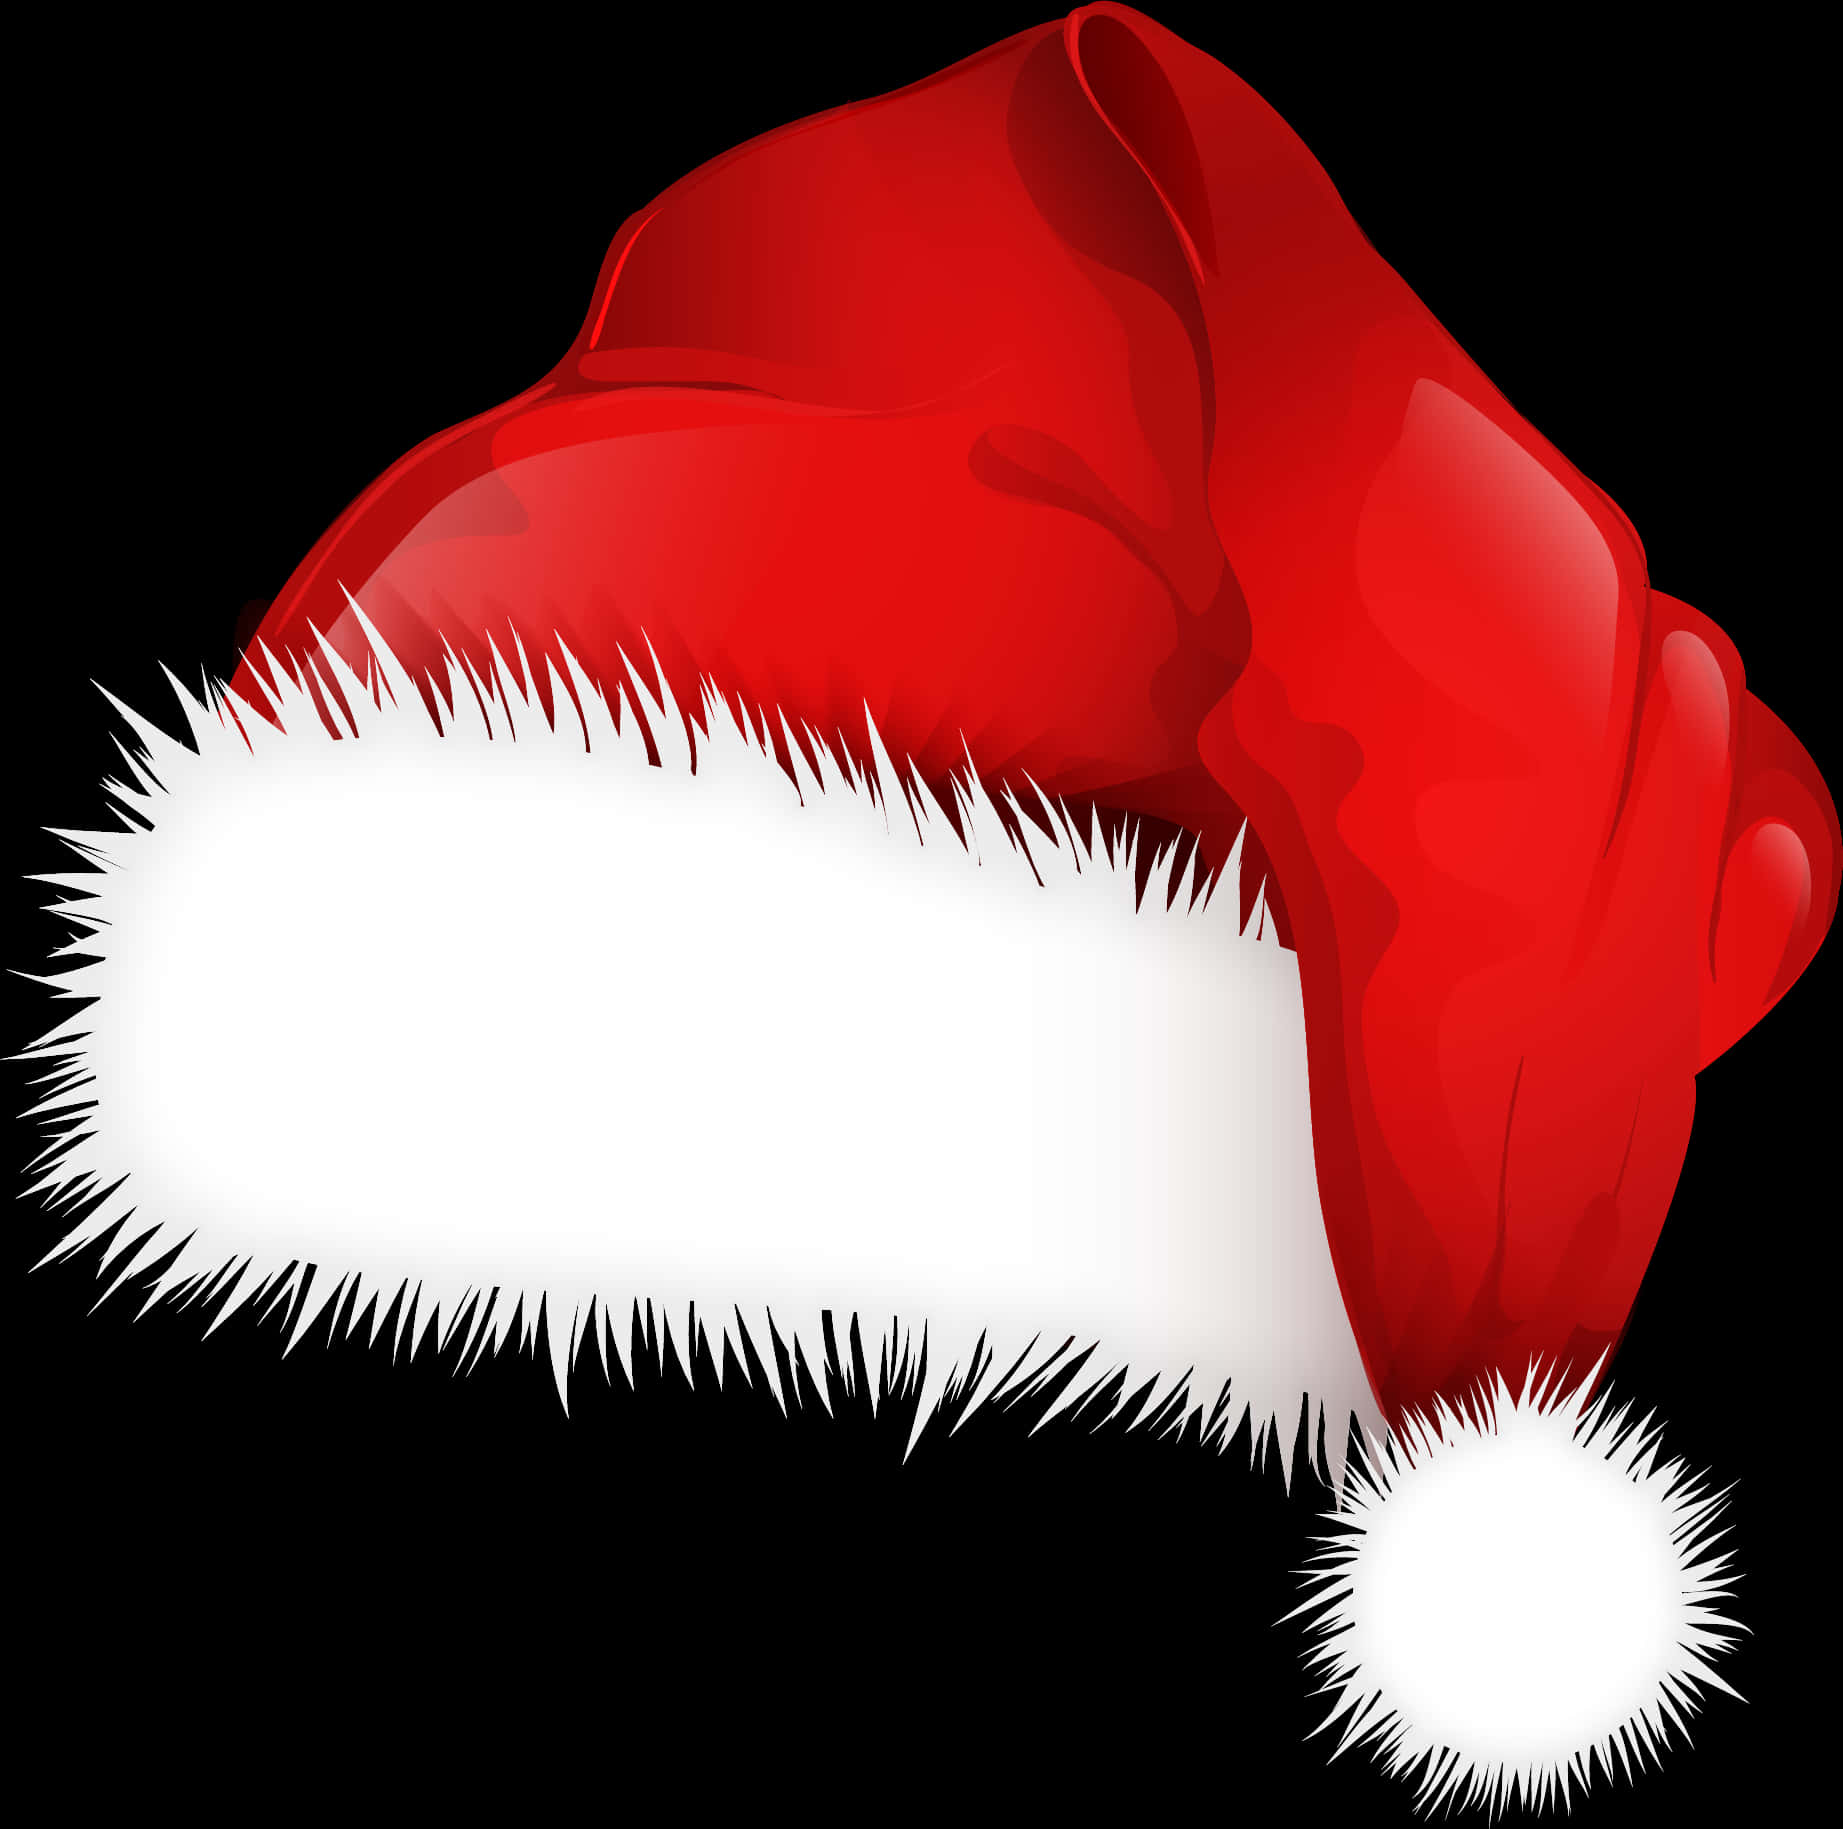 Red Christmas Santa Hat Illustration PNG image